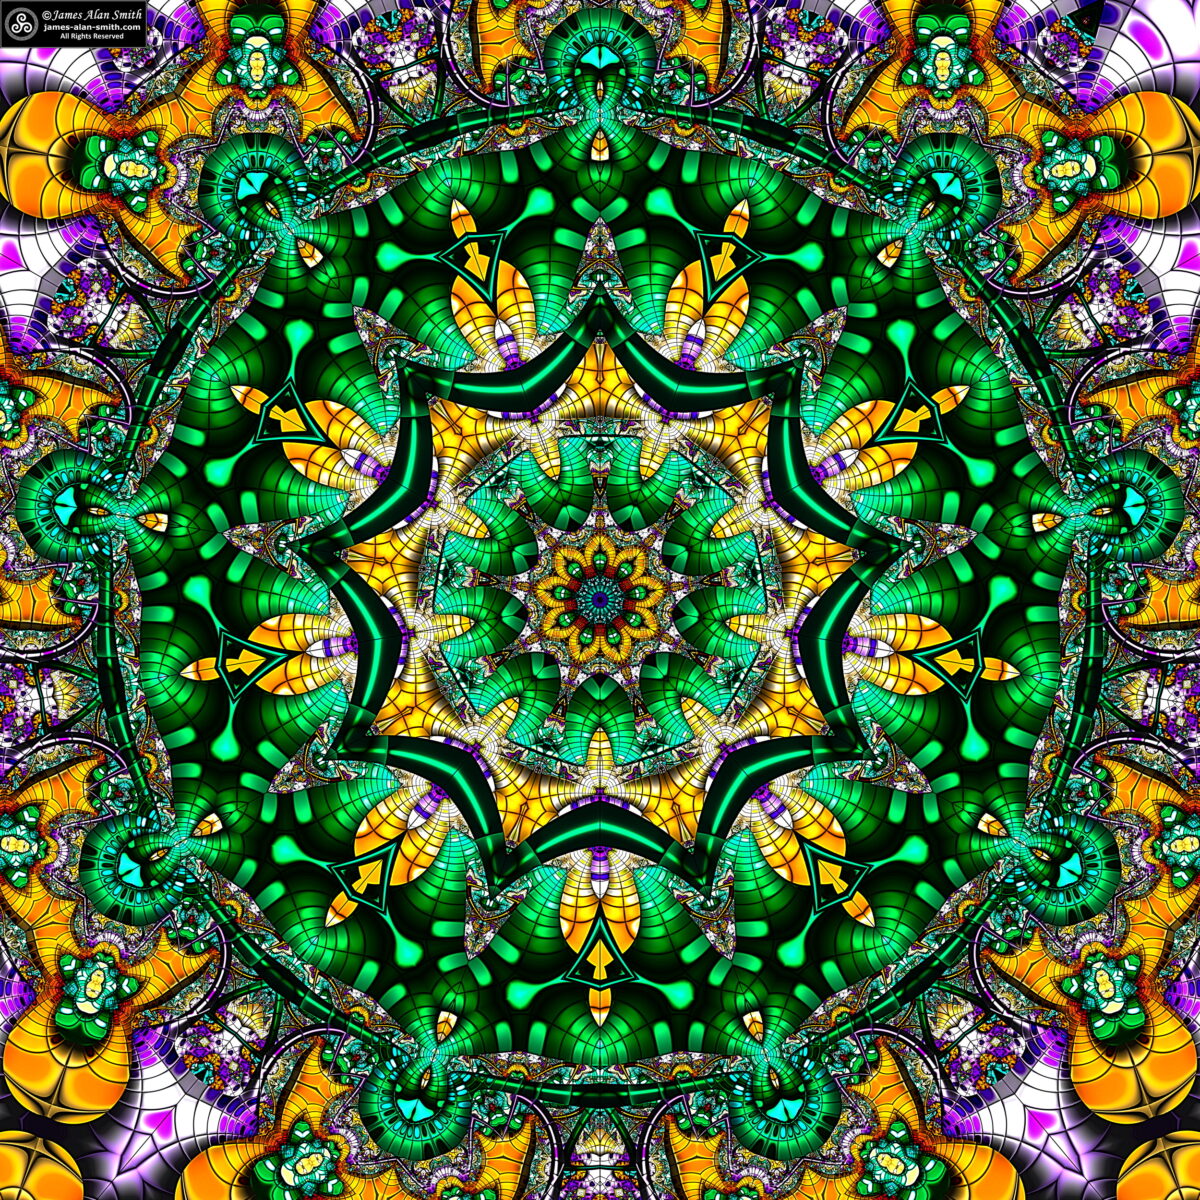 Unusual Mandala Series #120121: Artwork by James Alan Smith